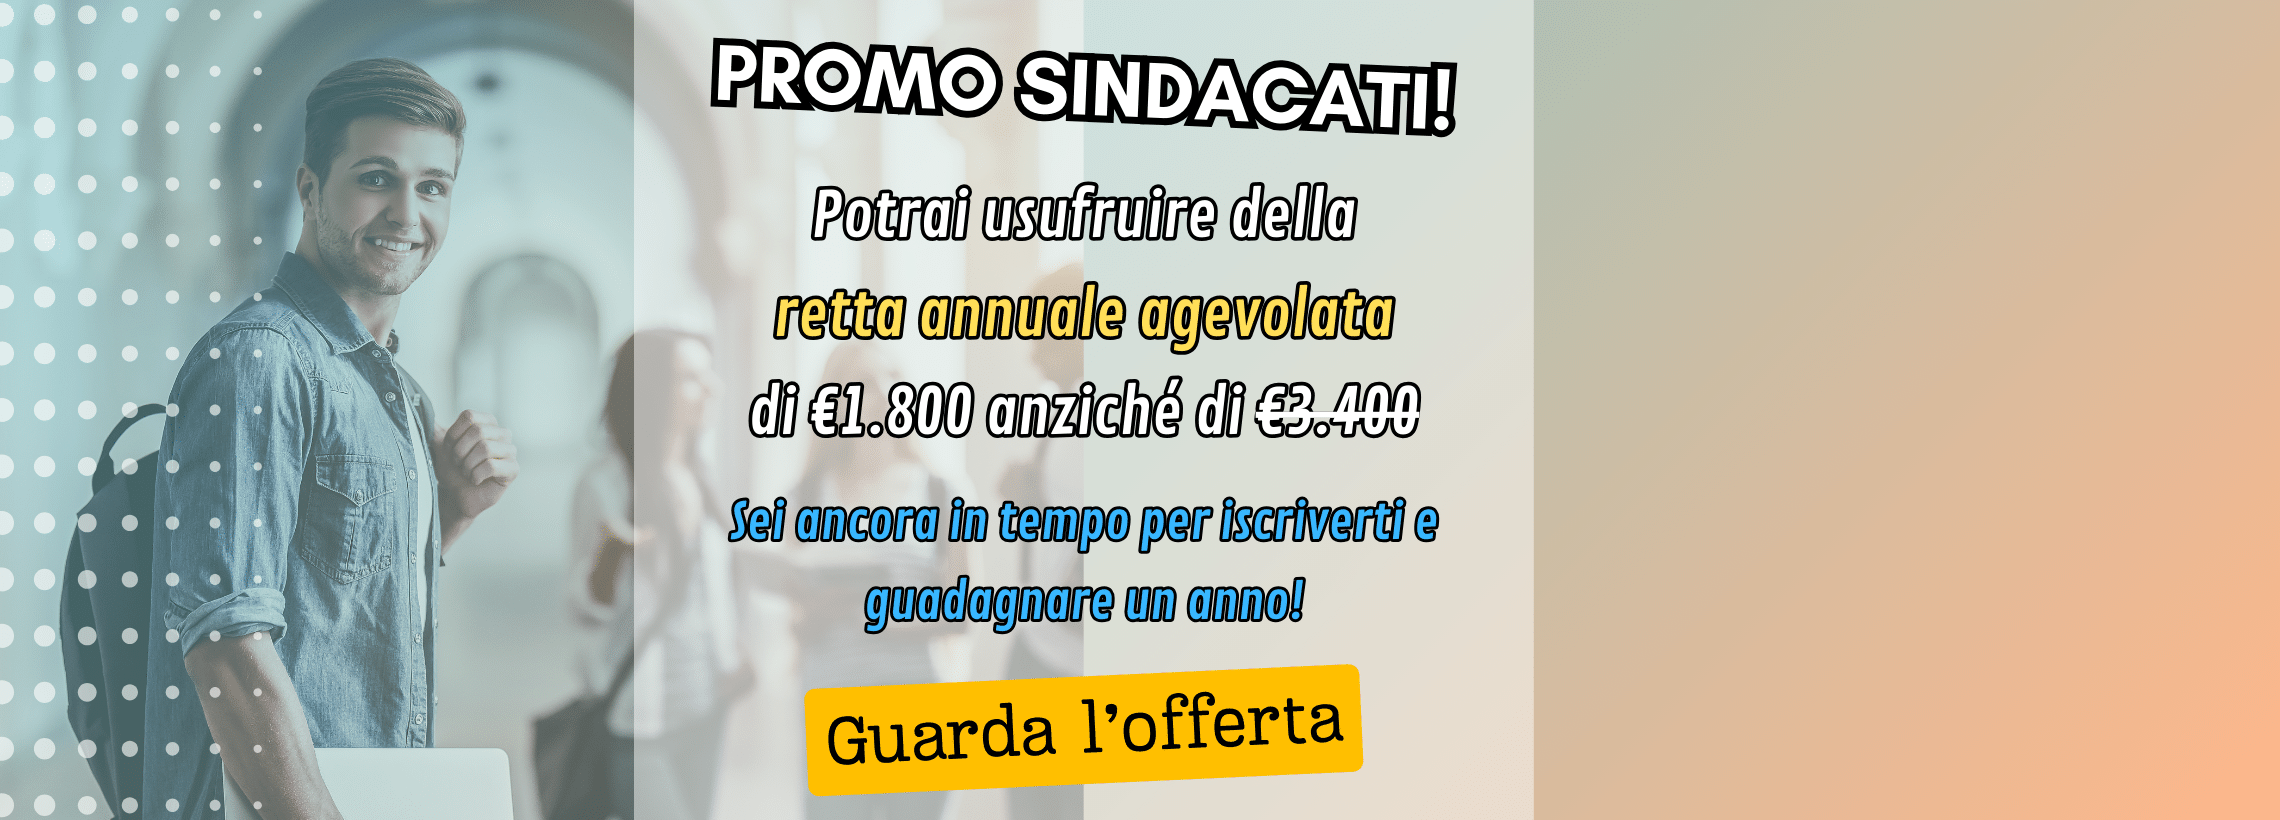 Promo_sindacati_ok